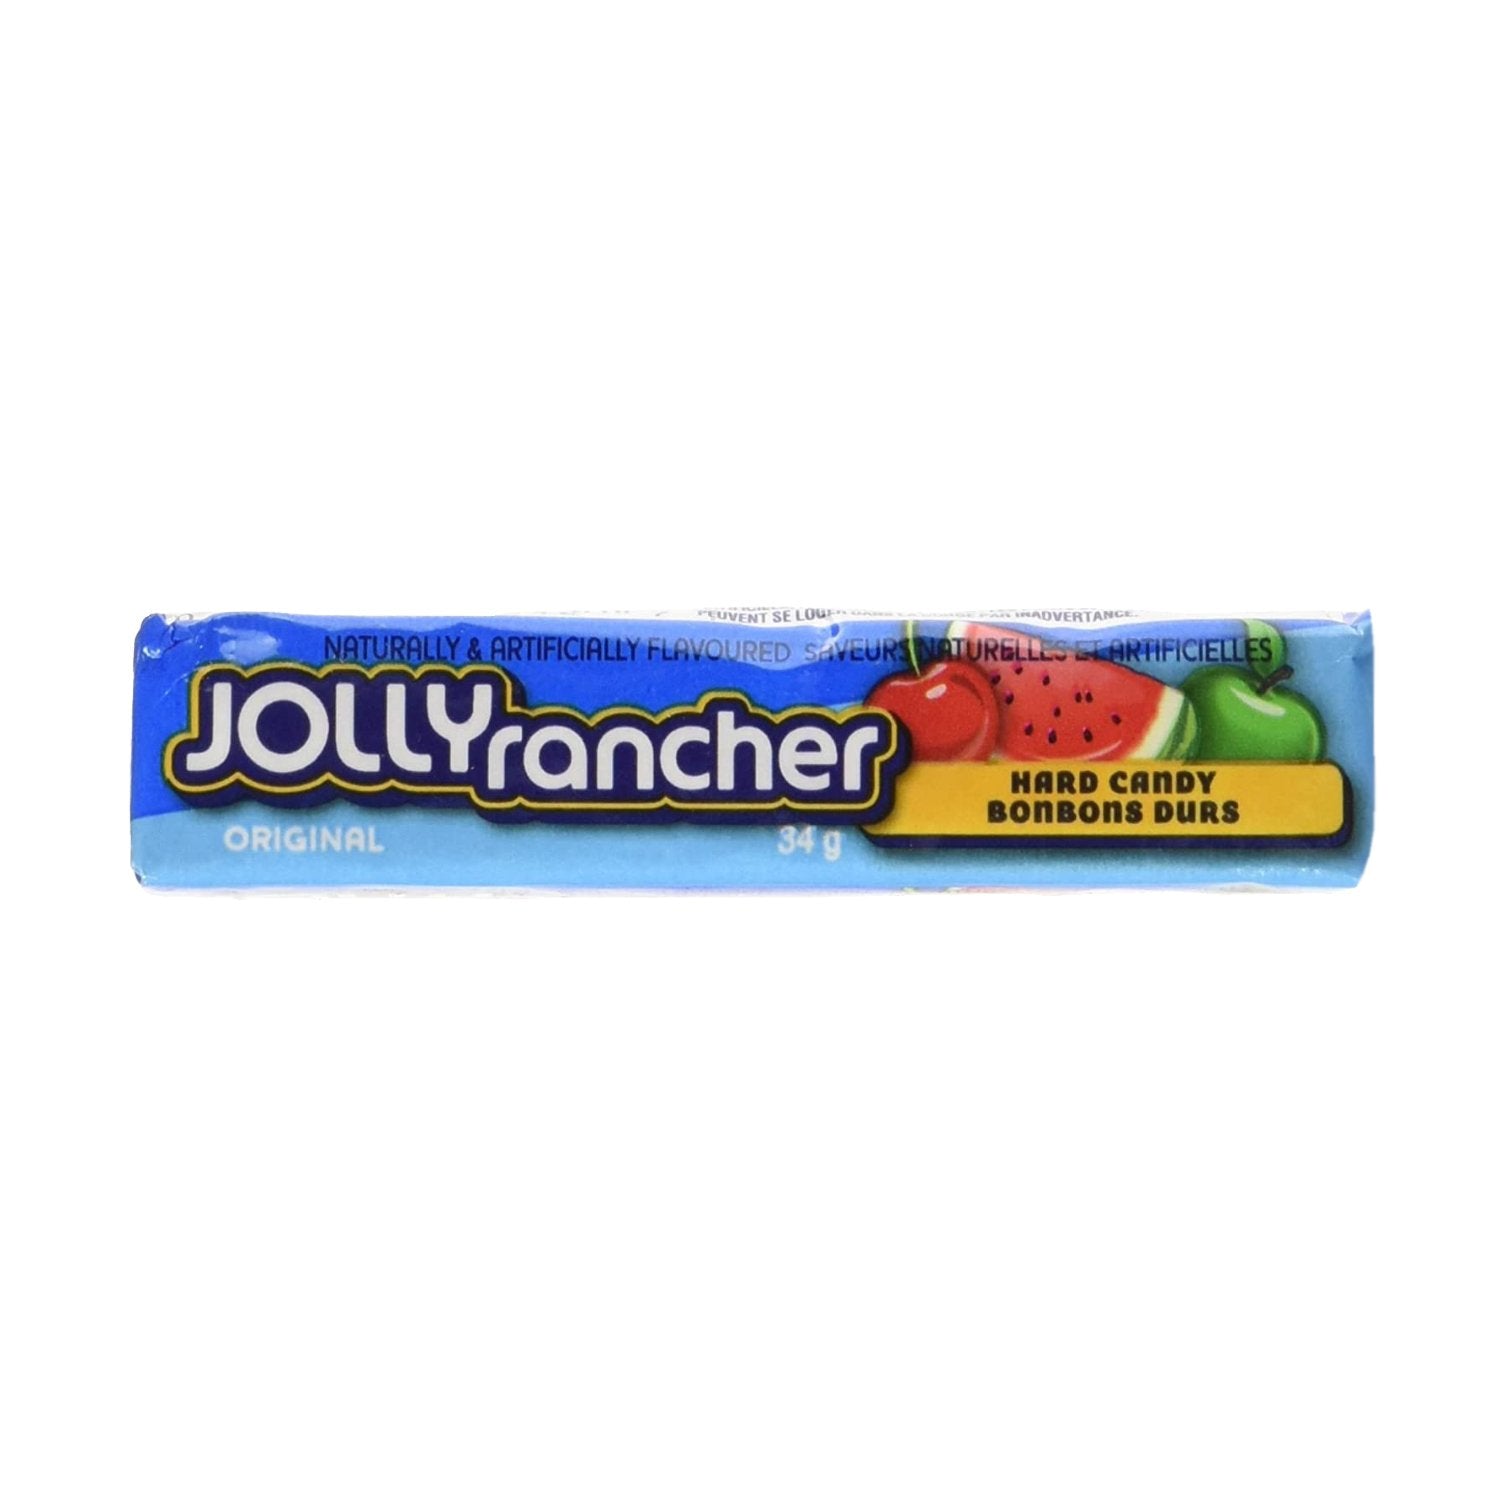 Jolly Rancher Original